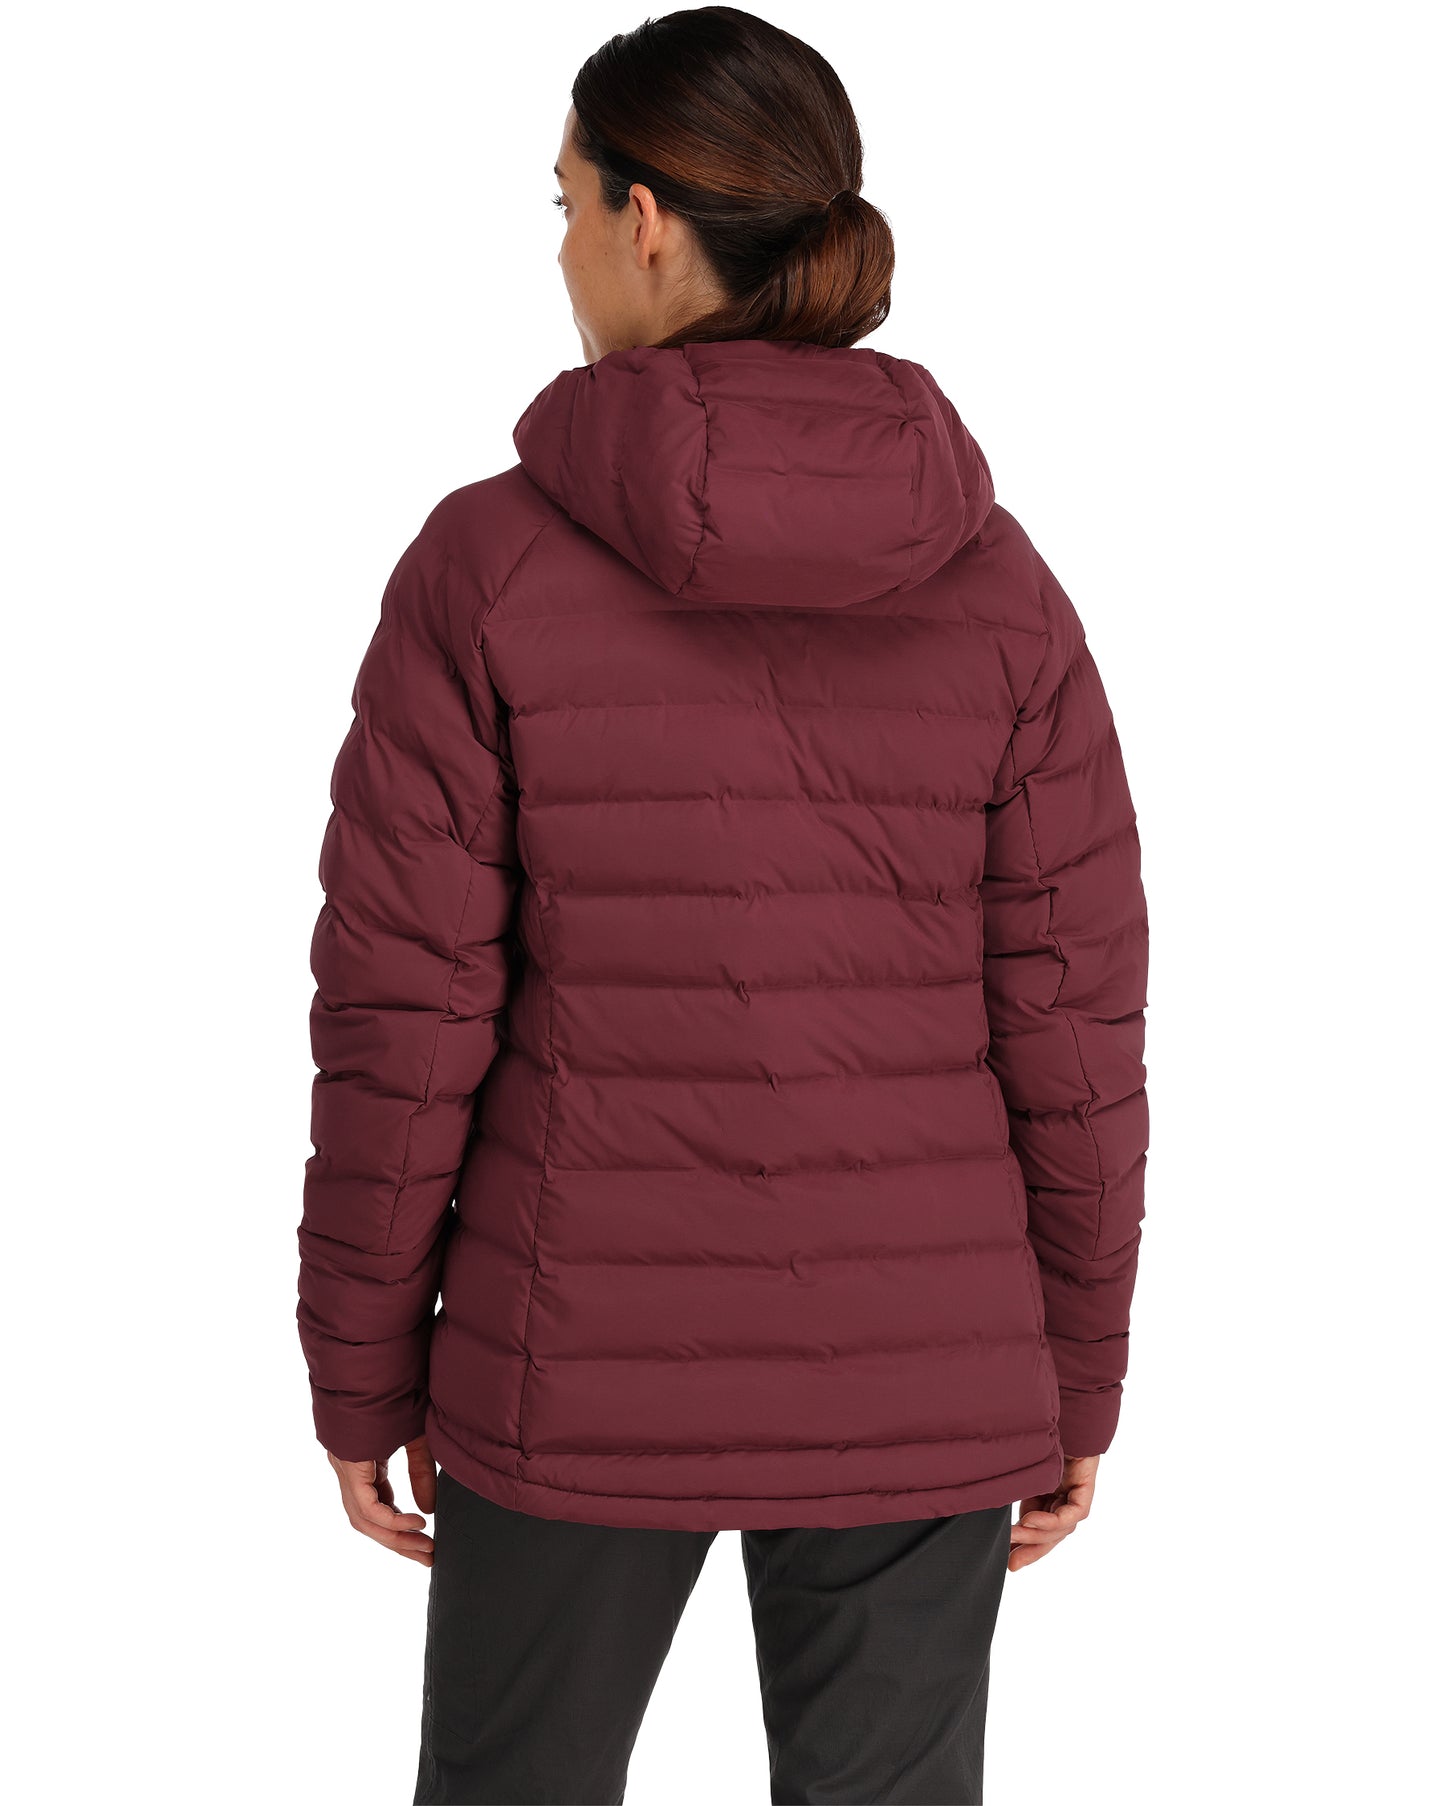 13555-624-exstream-hooded-jacket-model